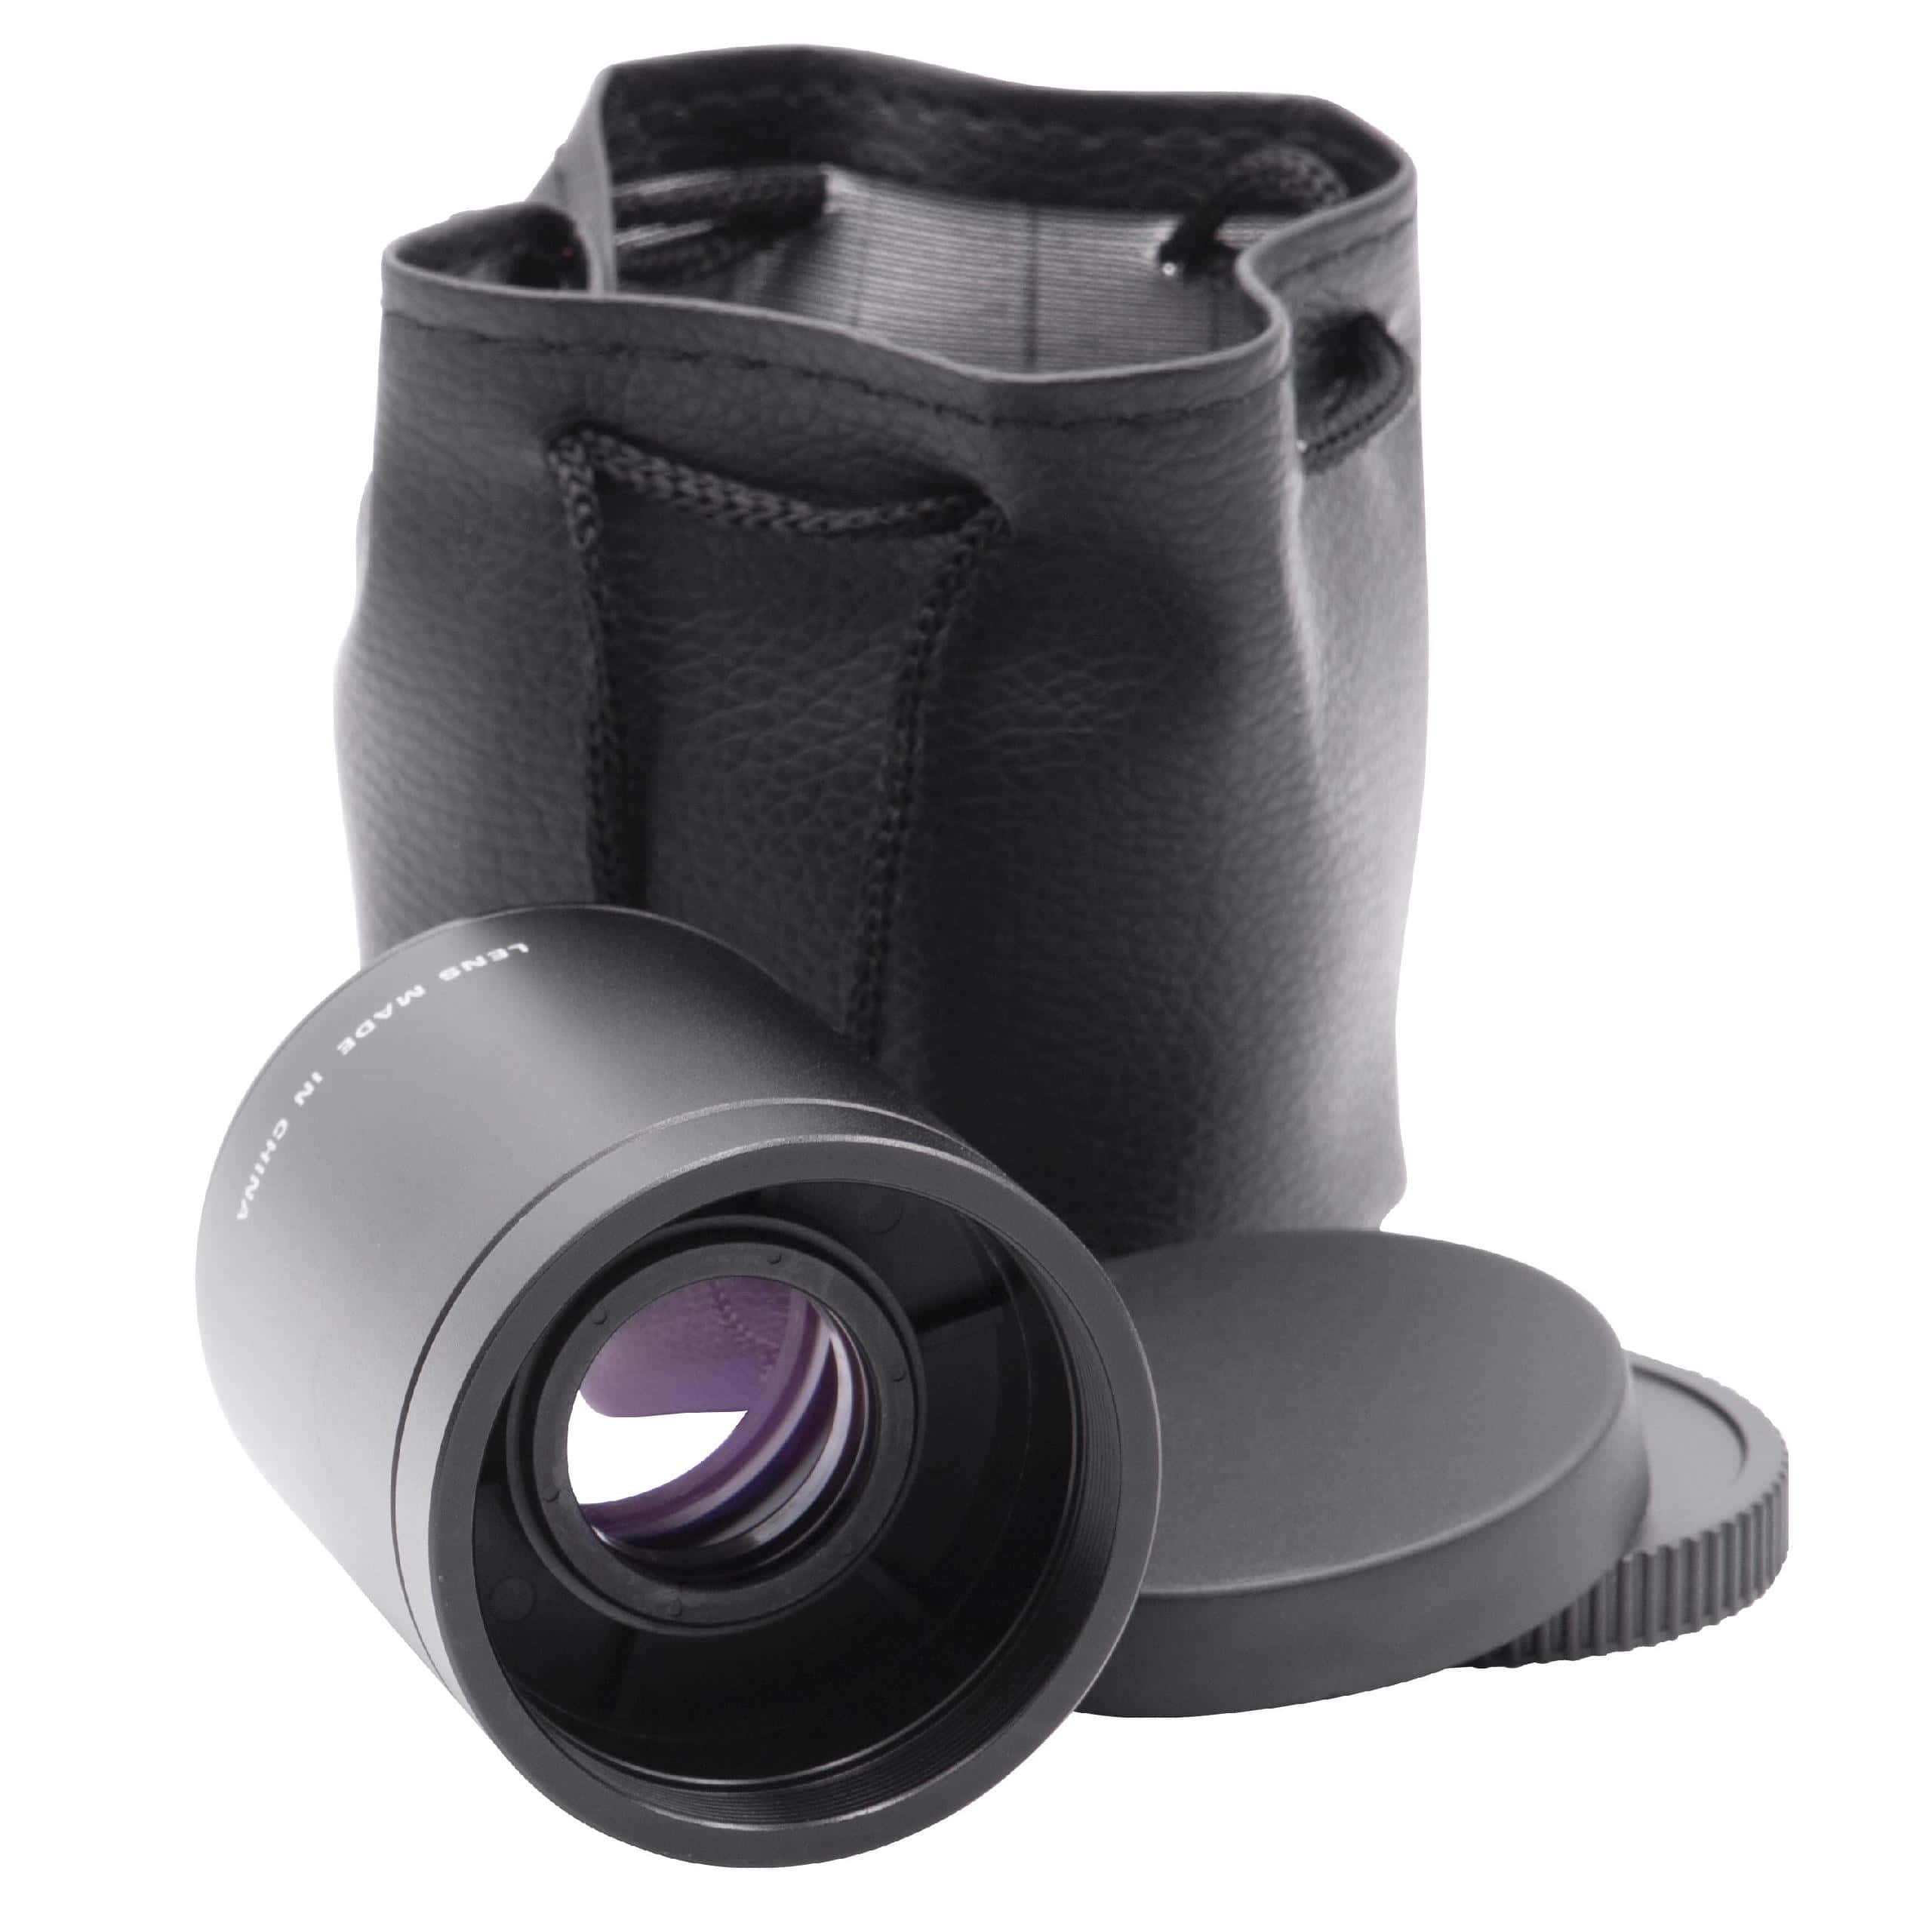 Teleconverter 2x Magnification for T2, T-Mount Lenses for Digital Camera, DSLR e.g. from Nikon, Canon, Sony Al